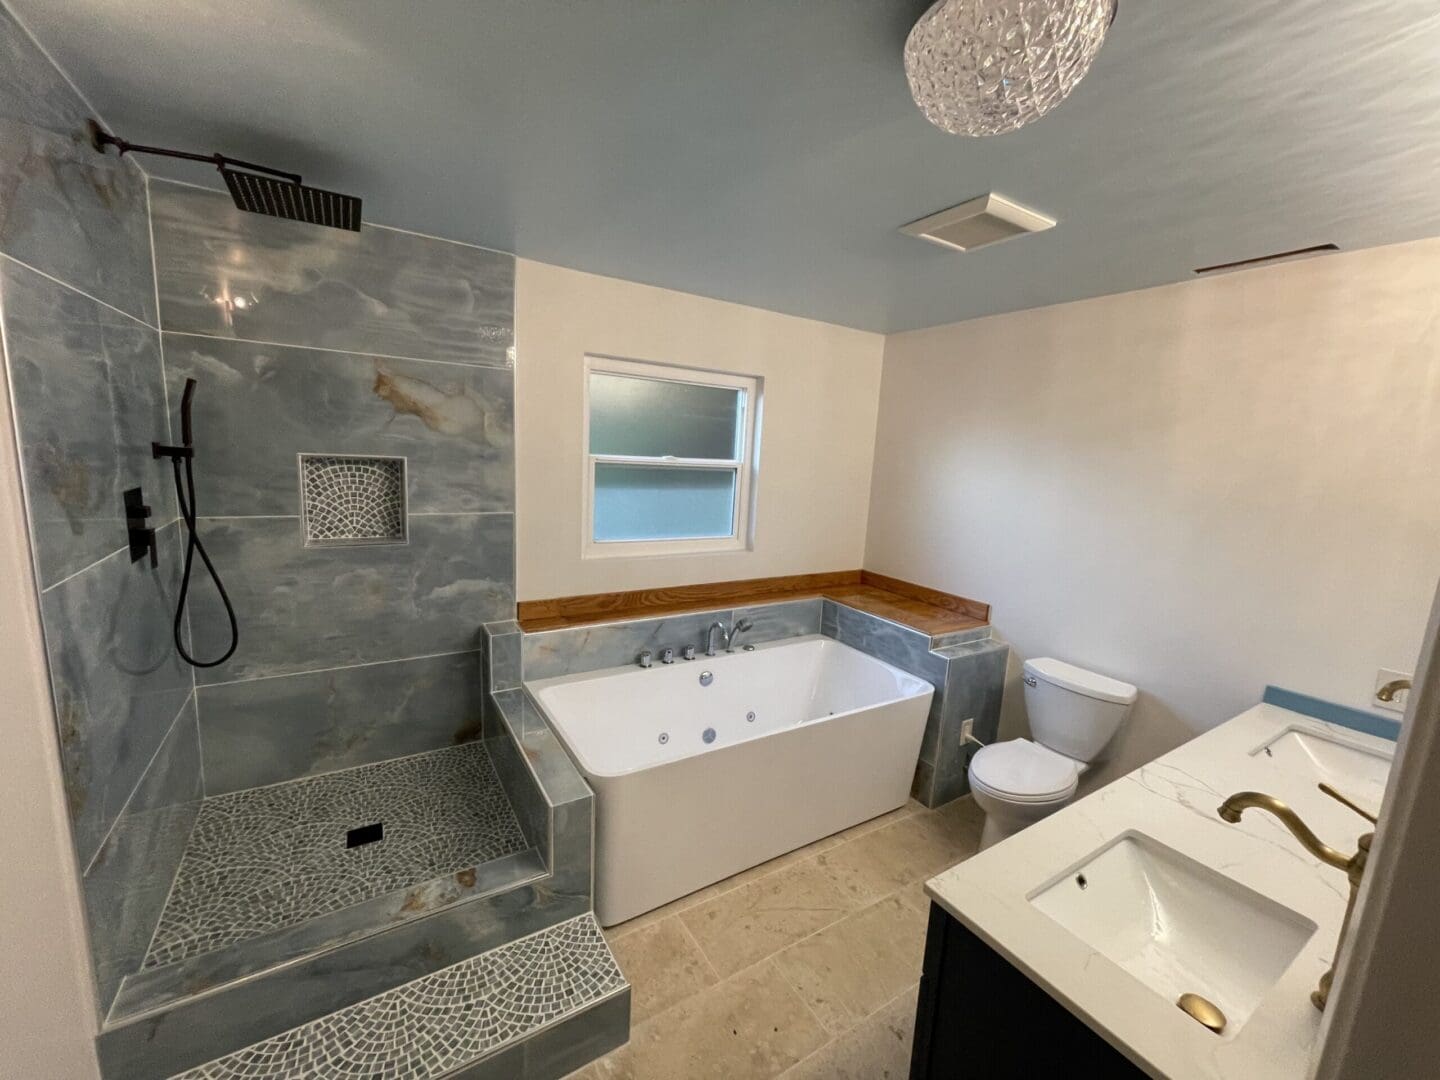 a bathroom with a shower area and a bath tub